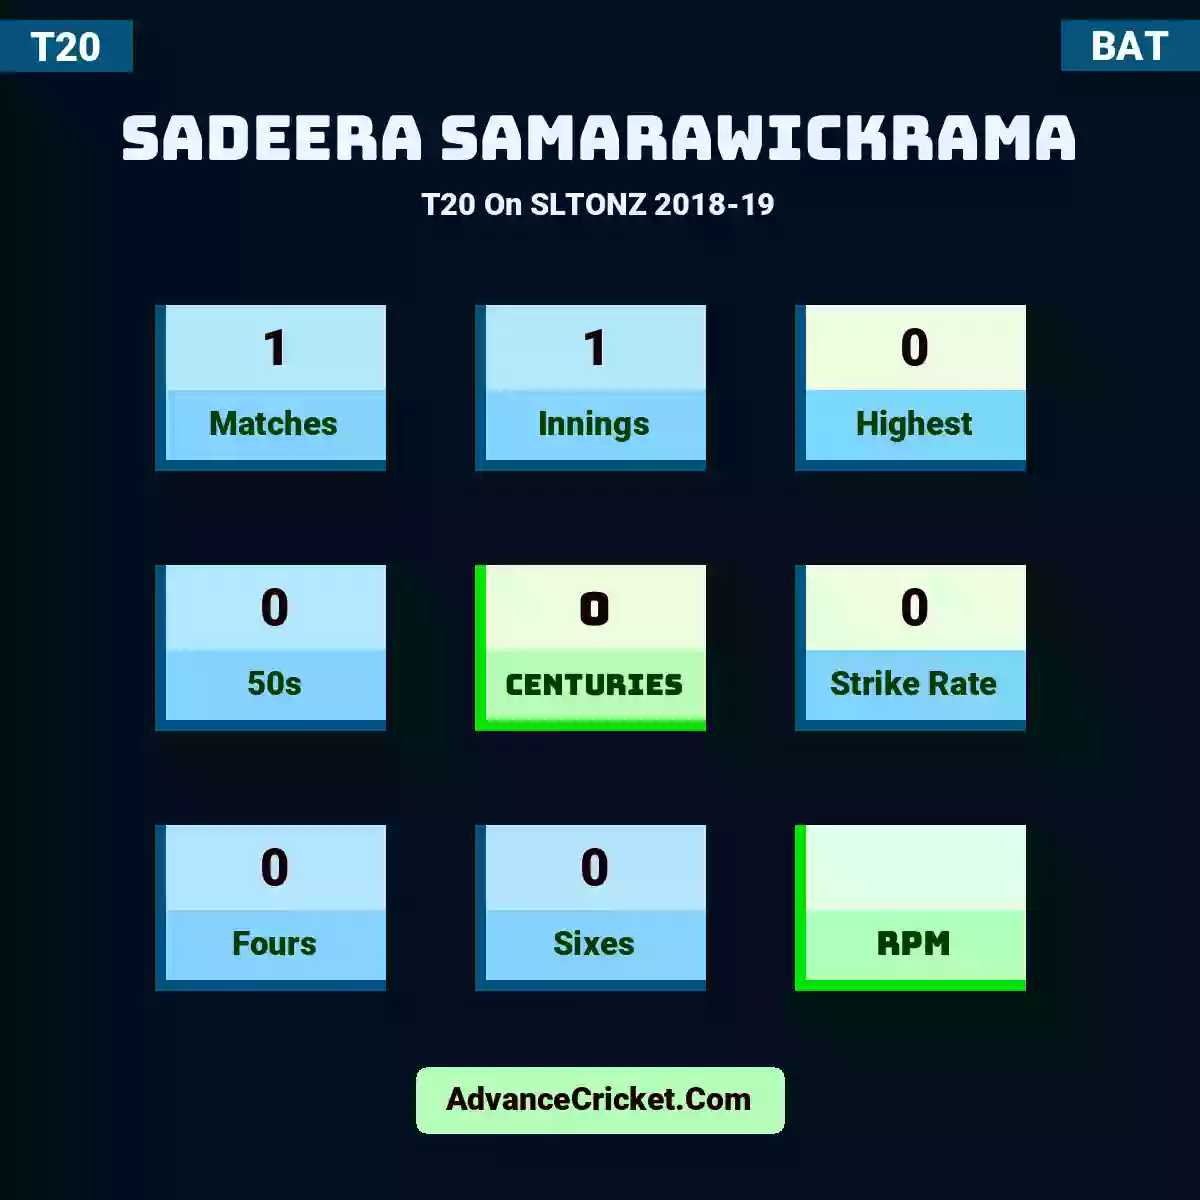 Sadeera Samarawickrama T20  On SLTONZ 2018-19, Sadeera Samarawickrama played 1 matches, scored 0 runs as highest, 0 half-centuries, and 0 centuries, with a strike rate of 0. S.Samarawickrama hit 0 fours and 0 sixes.